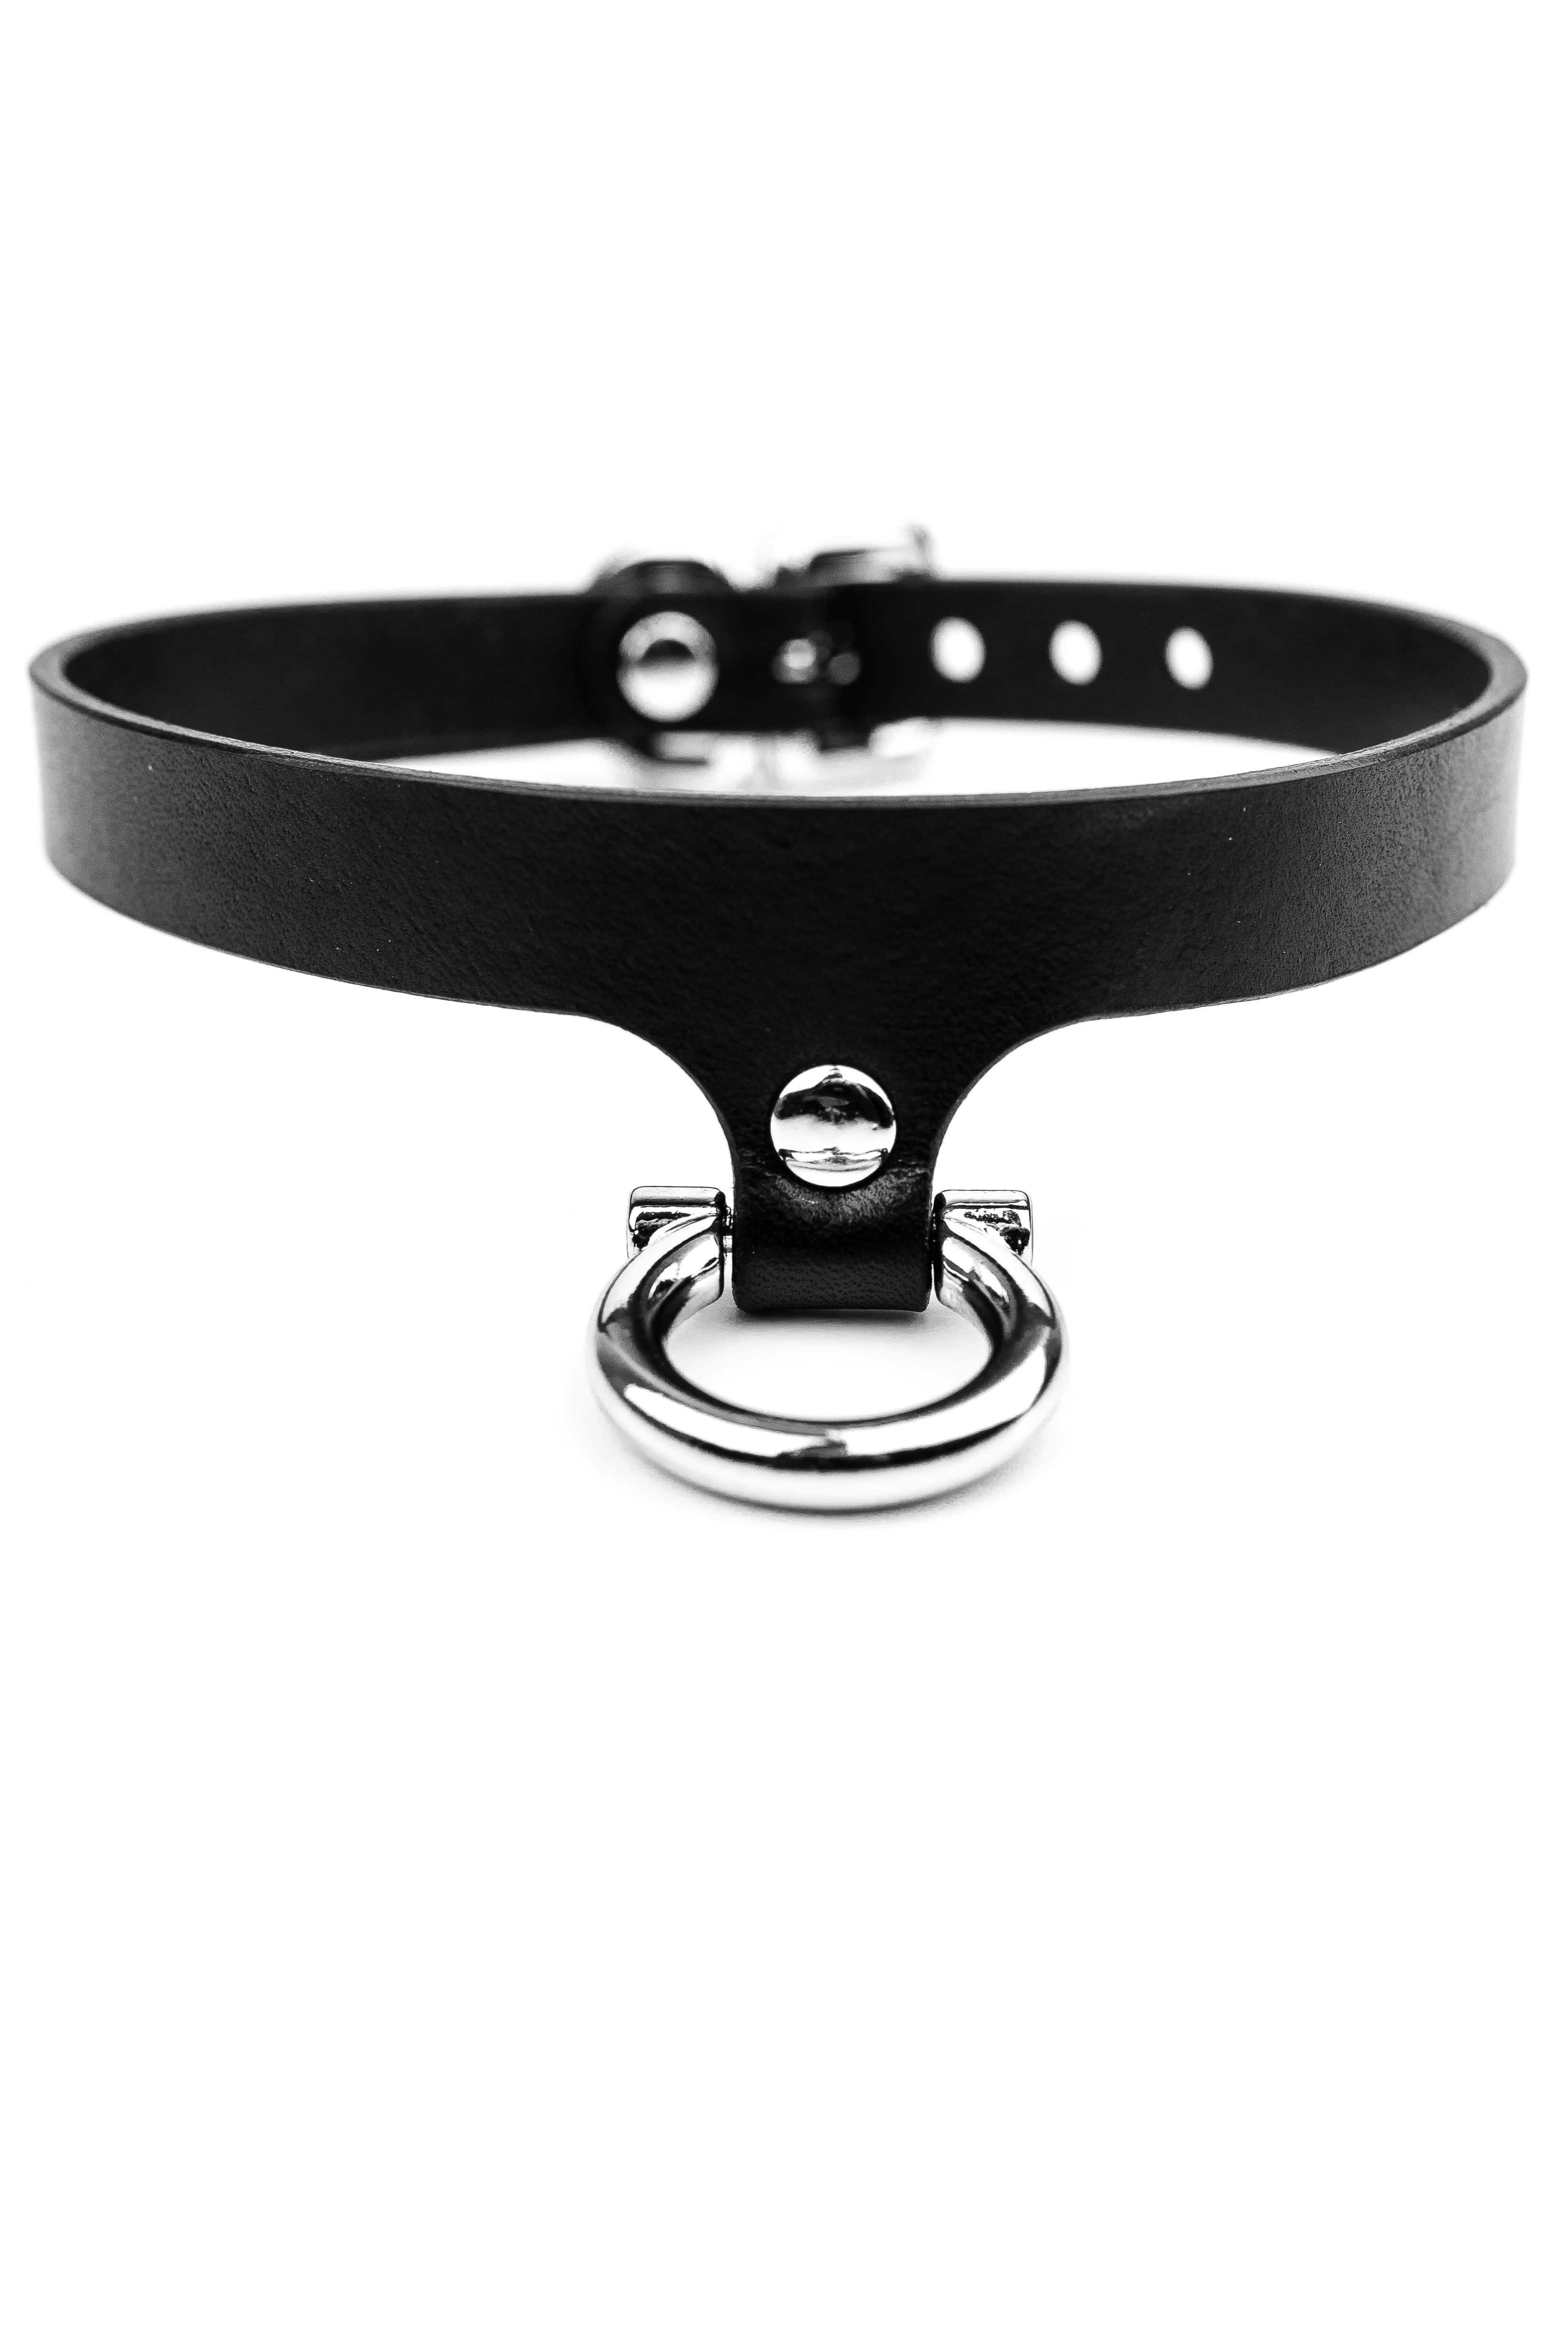 BDSM Collar “Horseshoe”